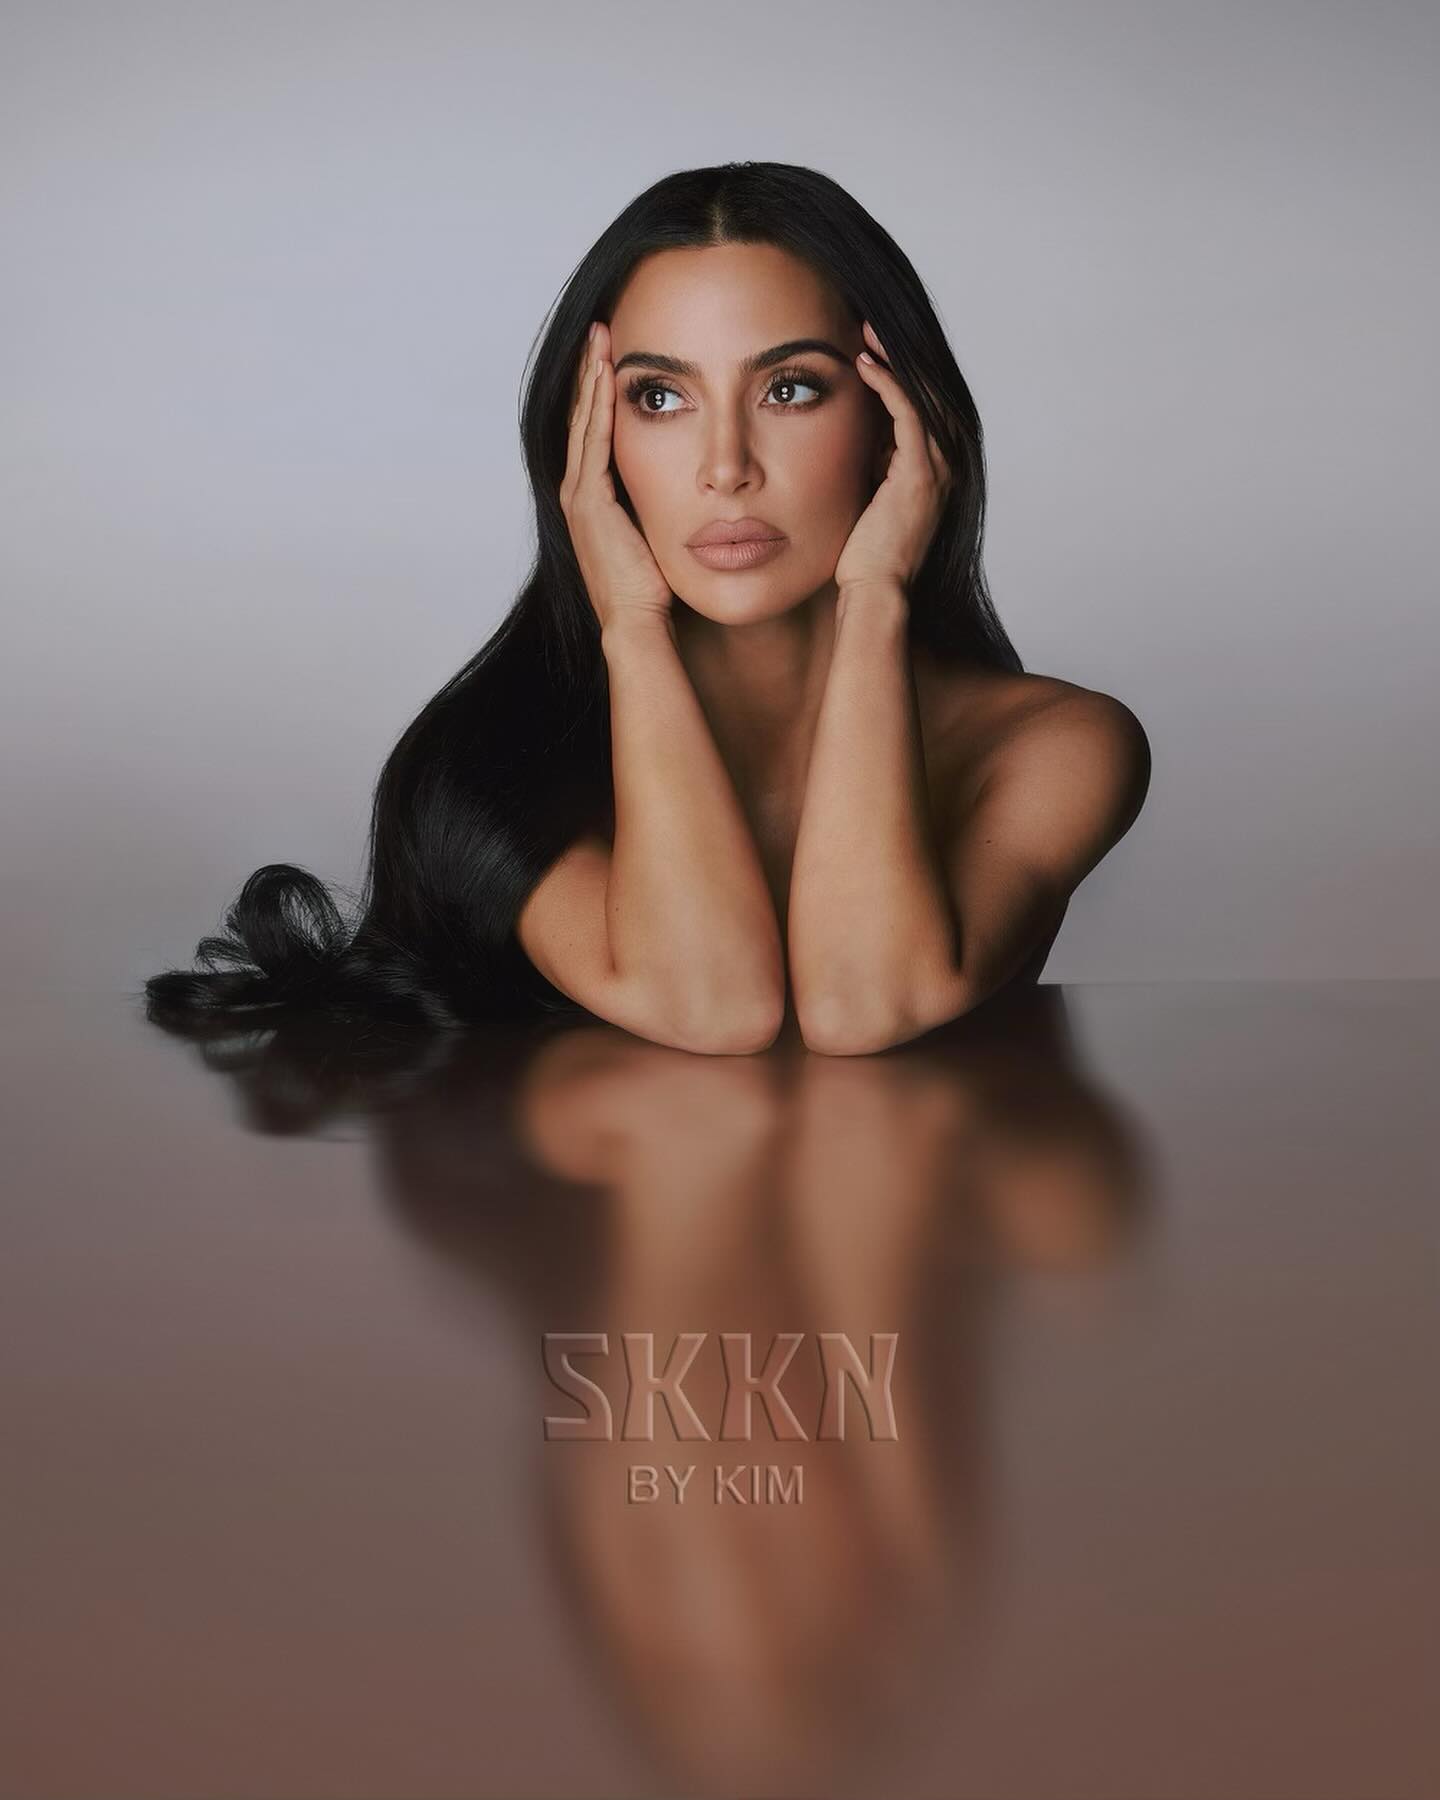 premiere of skkn makeup cosmetics